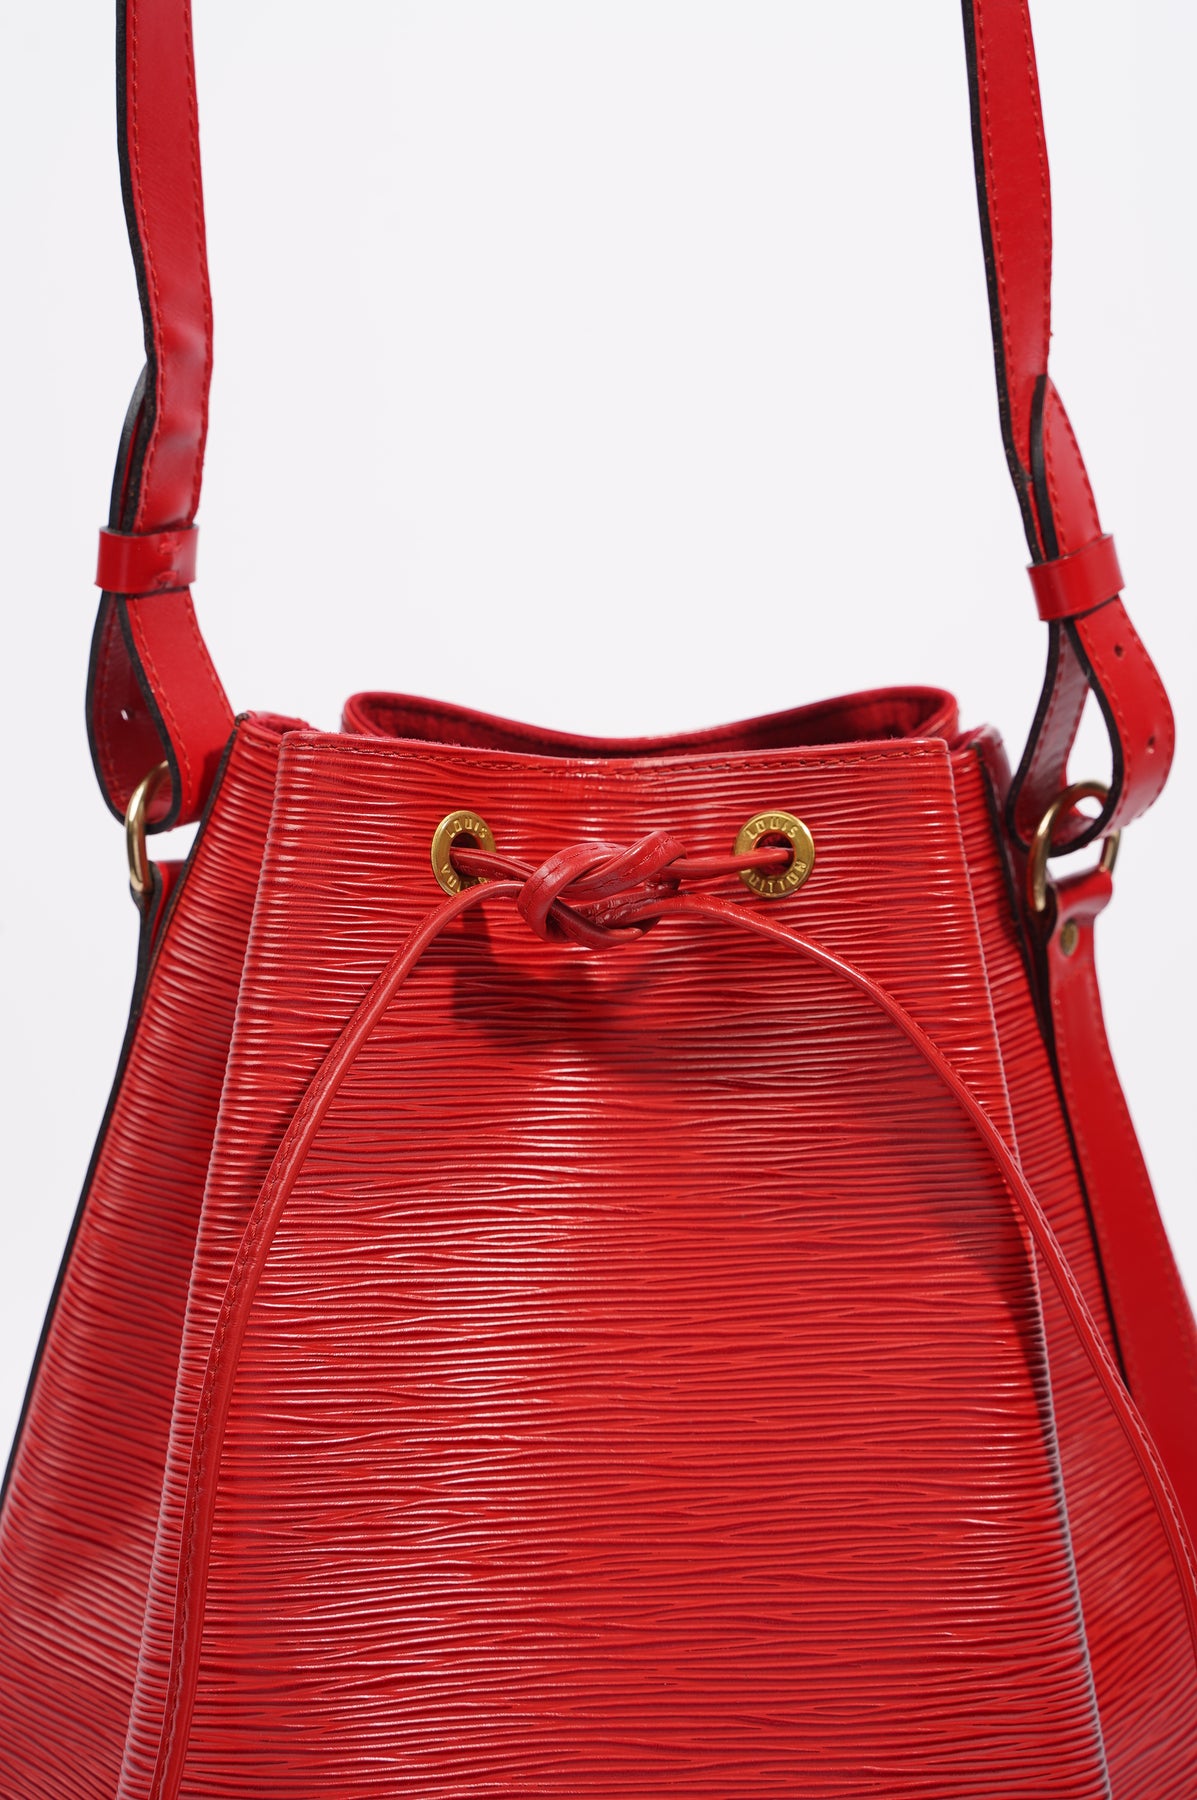 LOUIS VUITTON Epi Noe GM Red – Chanel Vuitton